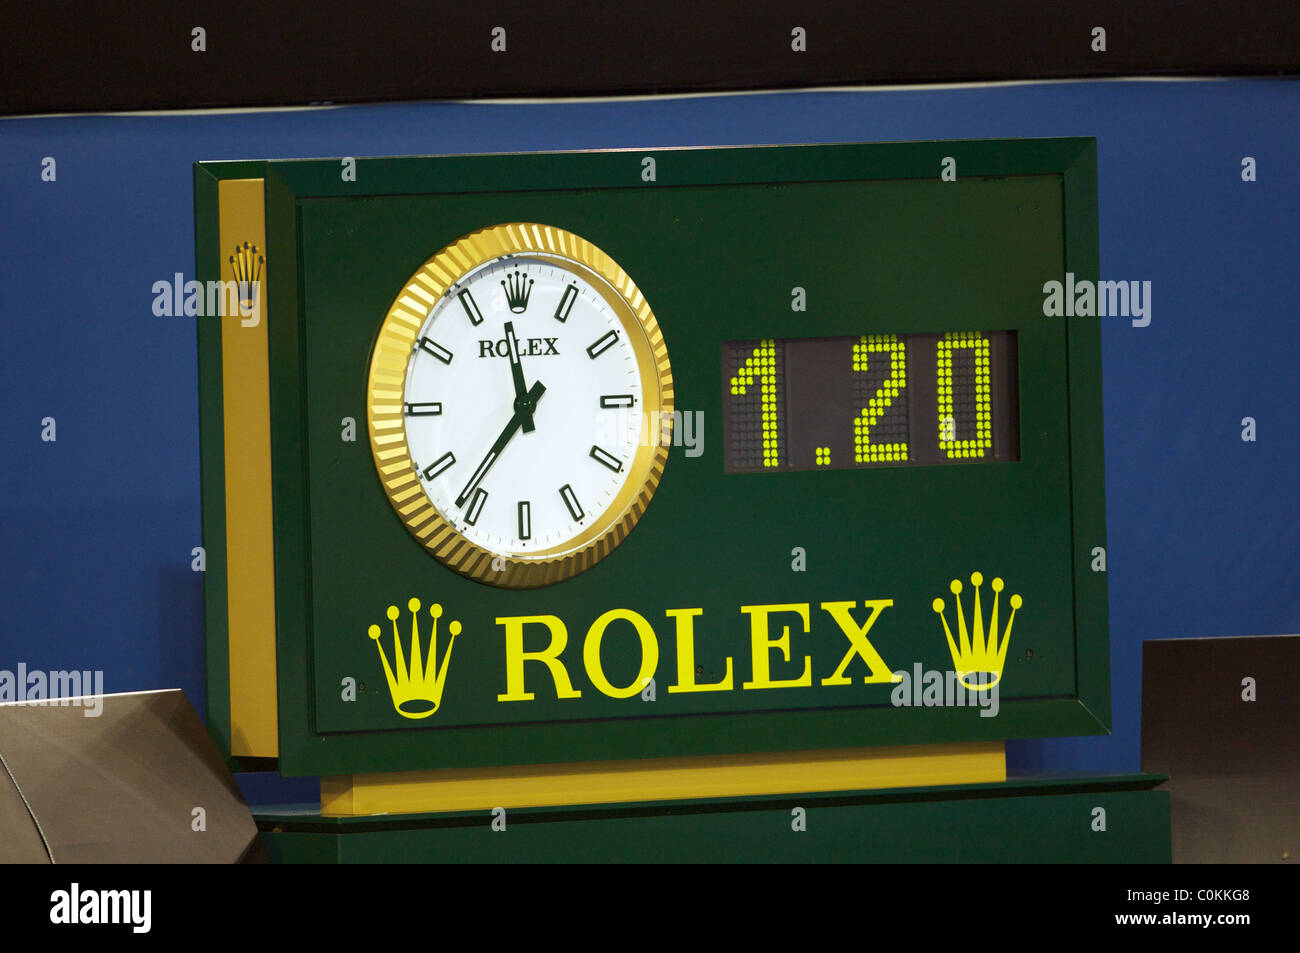 The Rolex clock used at the Australian Open Tennis Tournament, Melbourne,  Australiia Stock Photo - Alamy